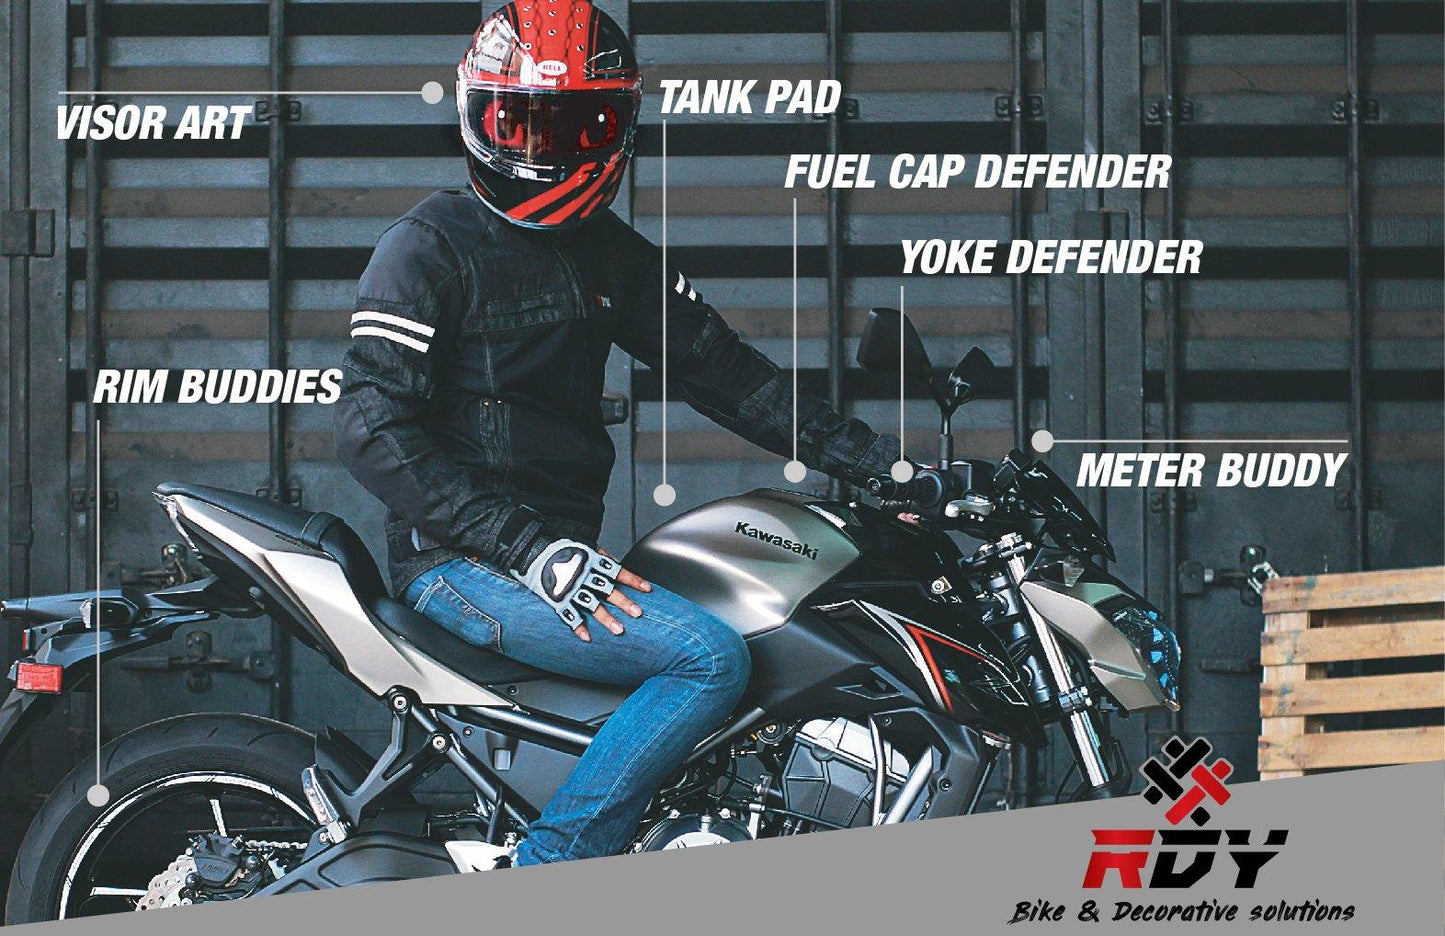 RDY Yoke Defender fits for Yamaha FZ6 / FZ6S ('05-'06) - Durian Bikers